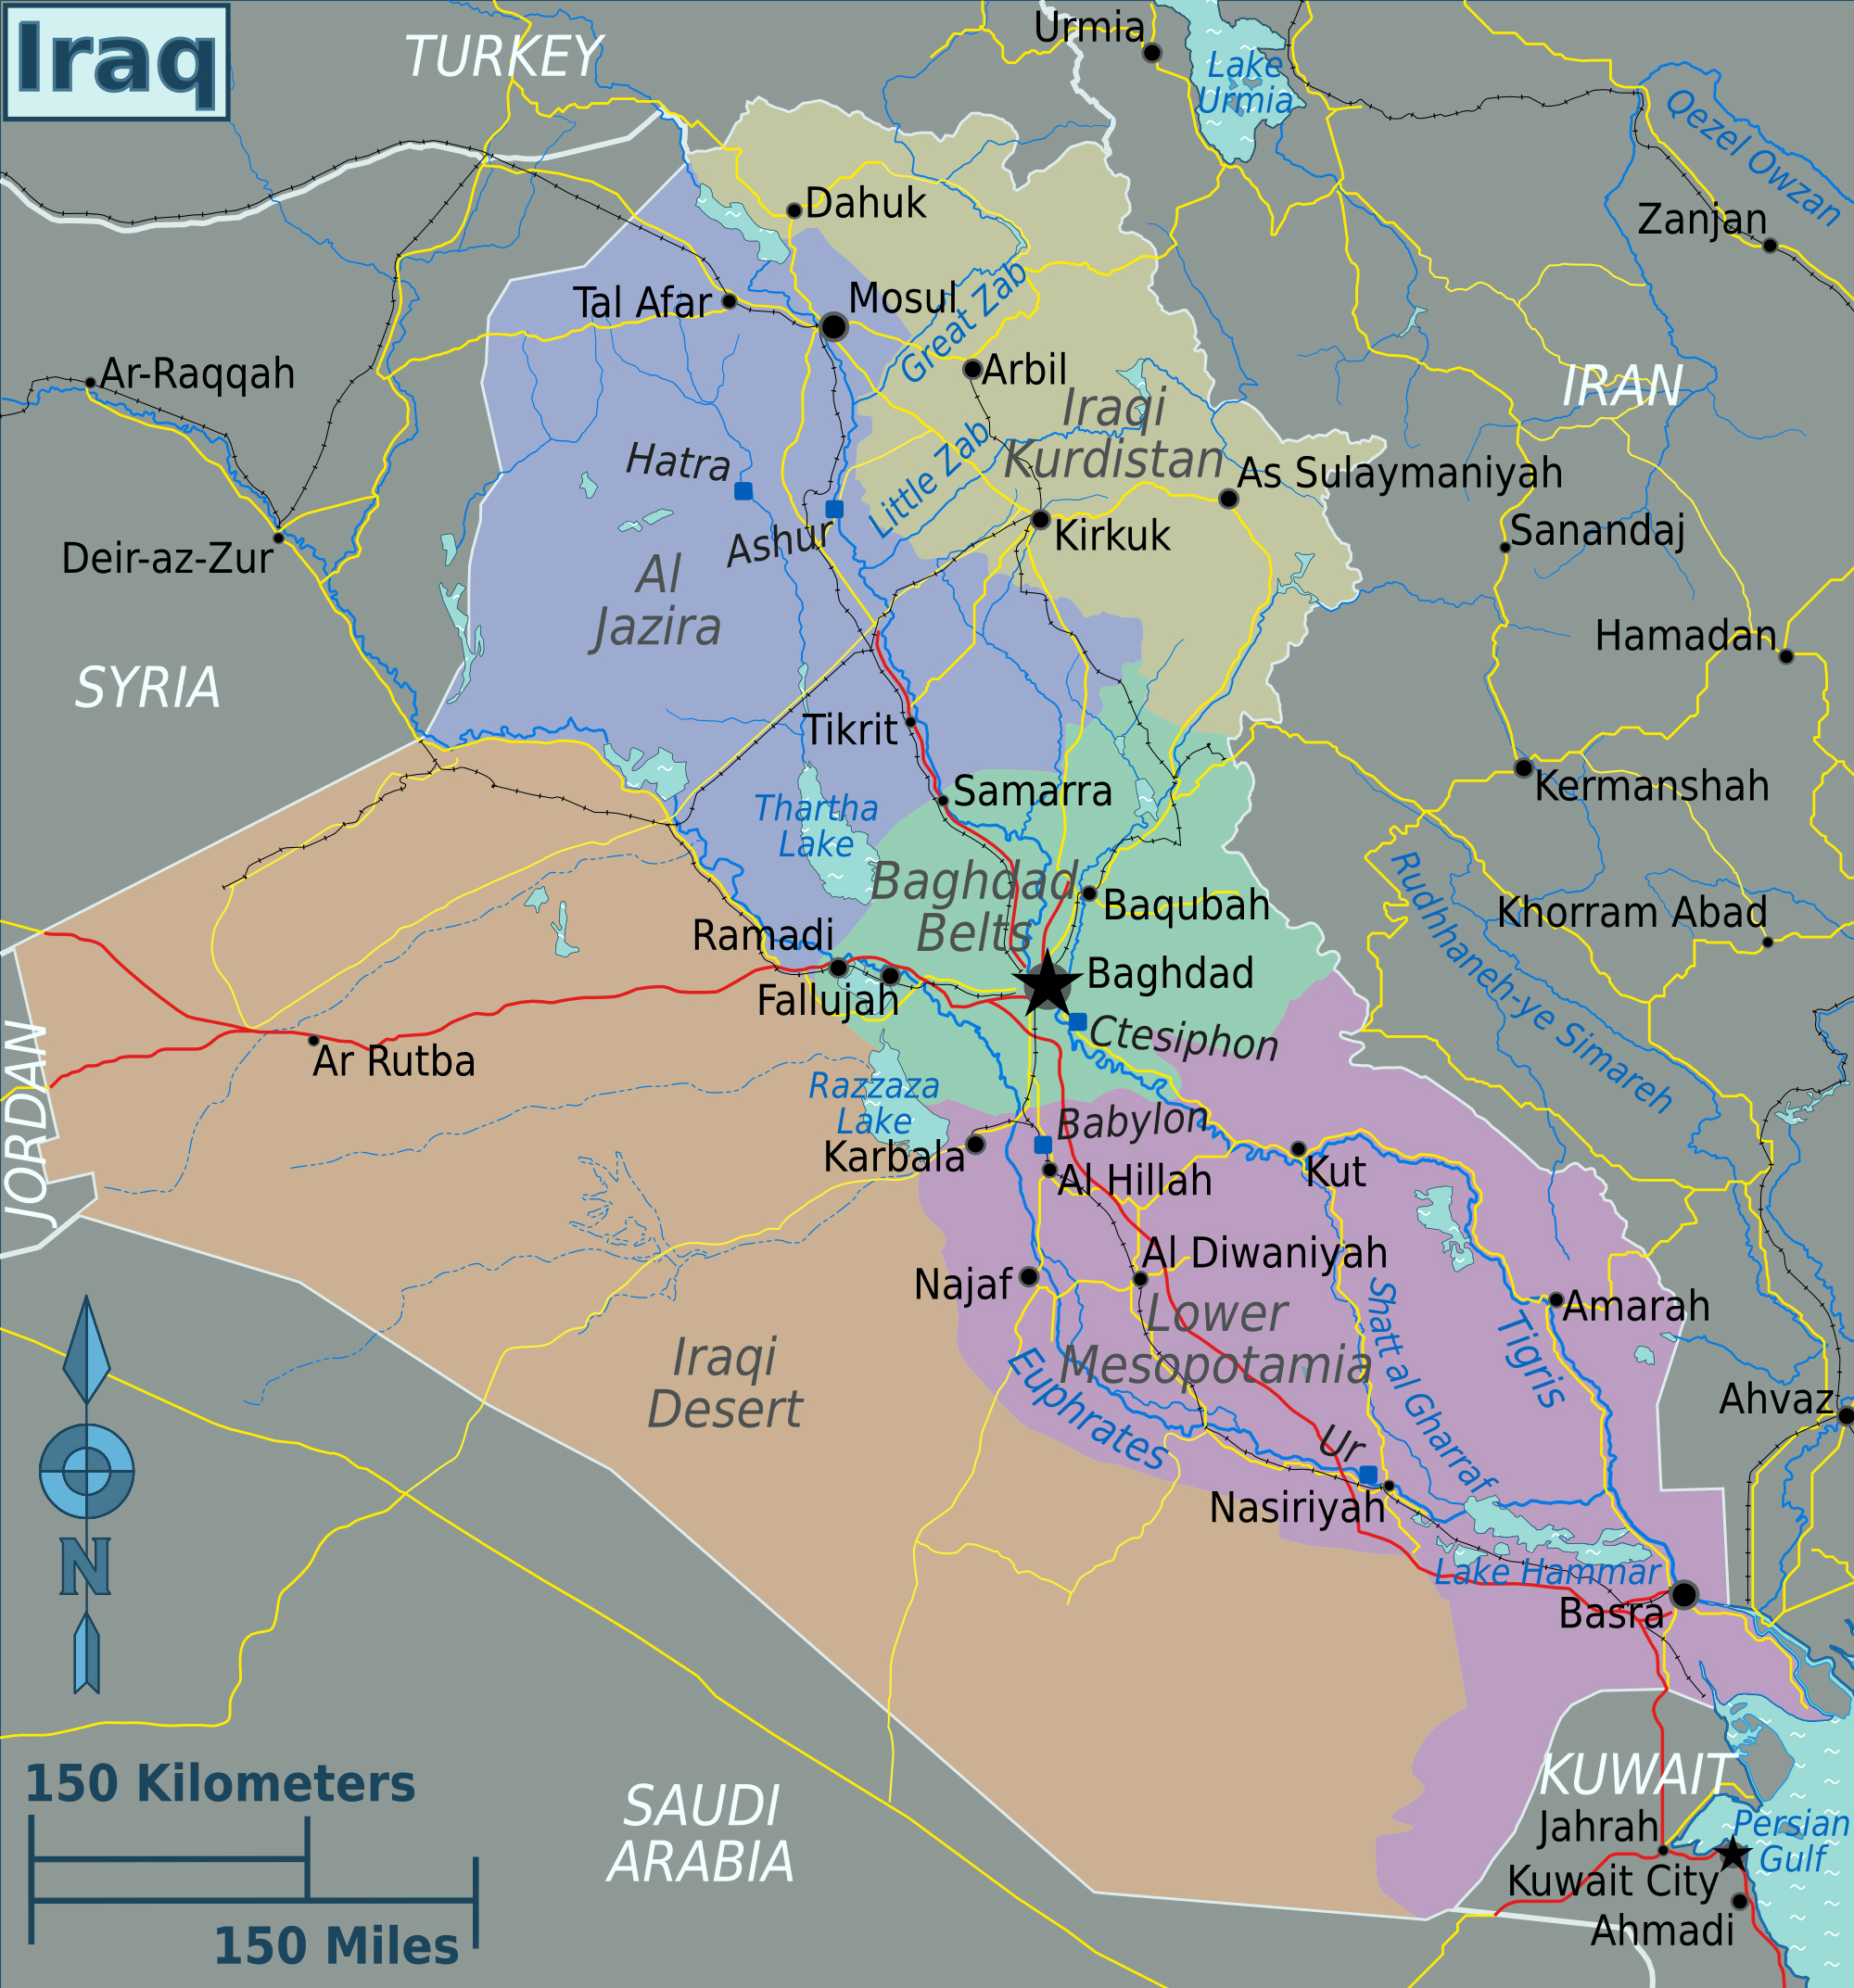 Large regions map of Iraq | Iraq | Asia | Mapsland | Maps of the World